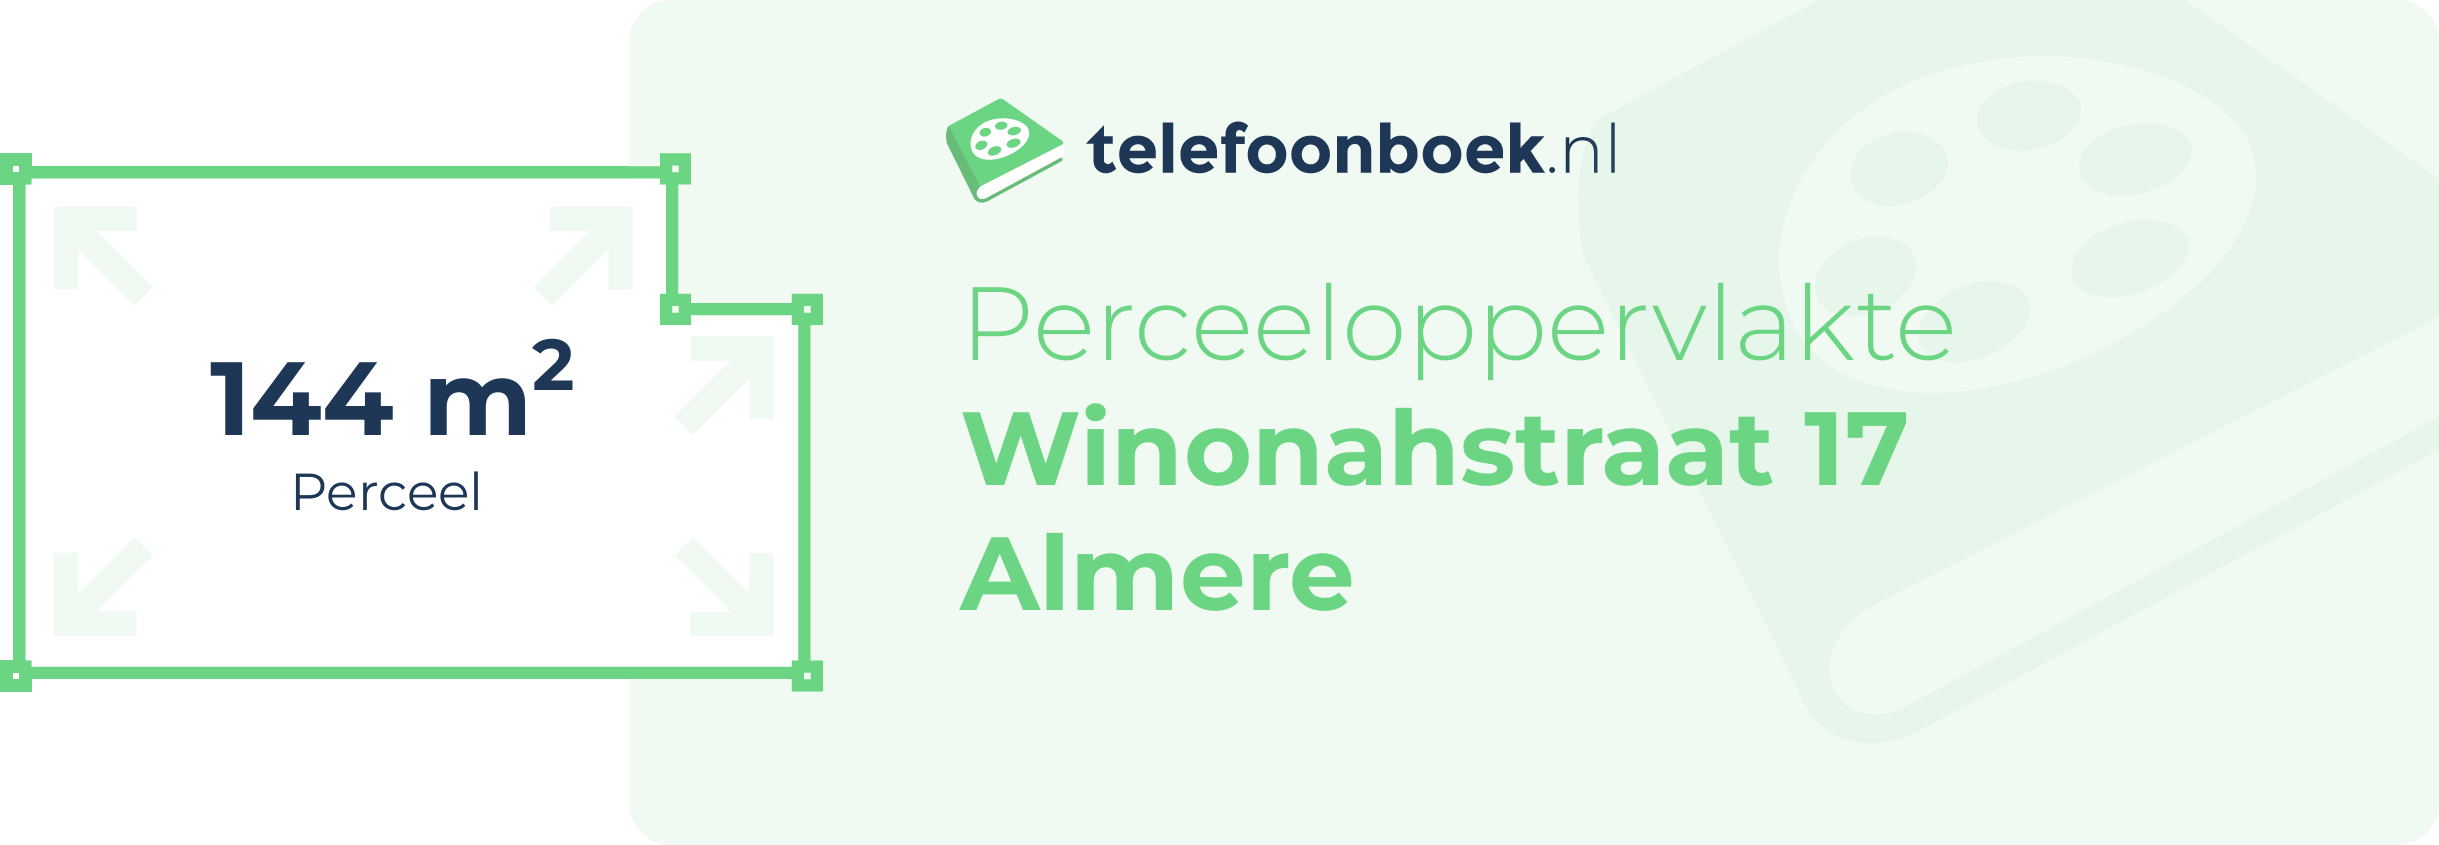 Perceeloppervlakte Winonahstraat 17 Almere